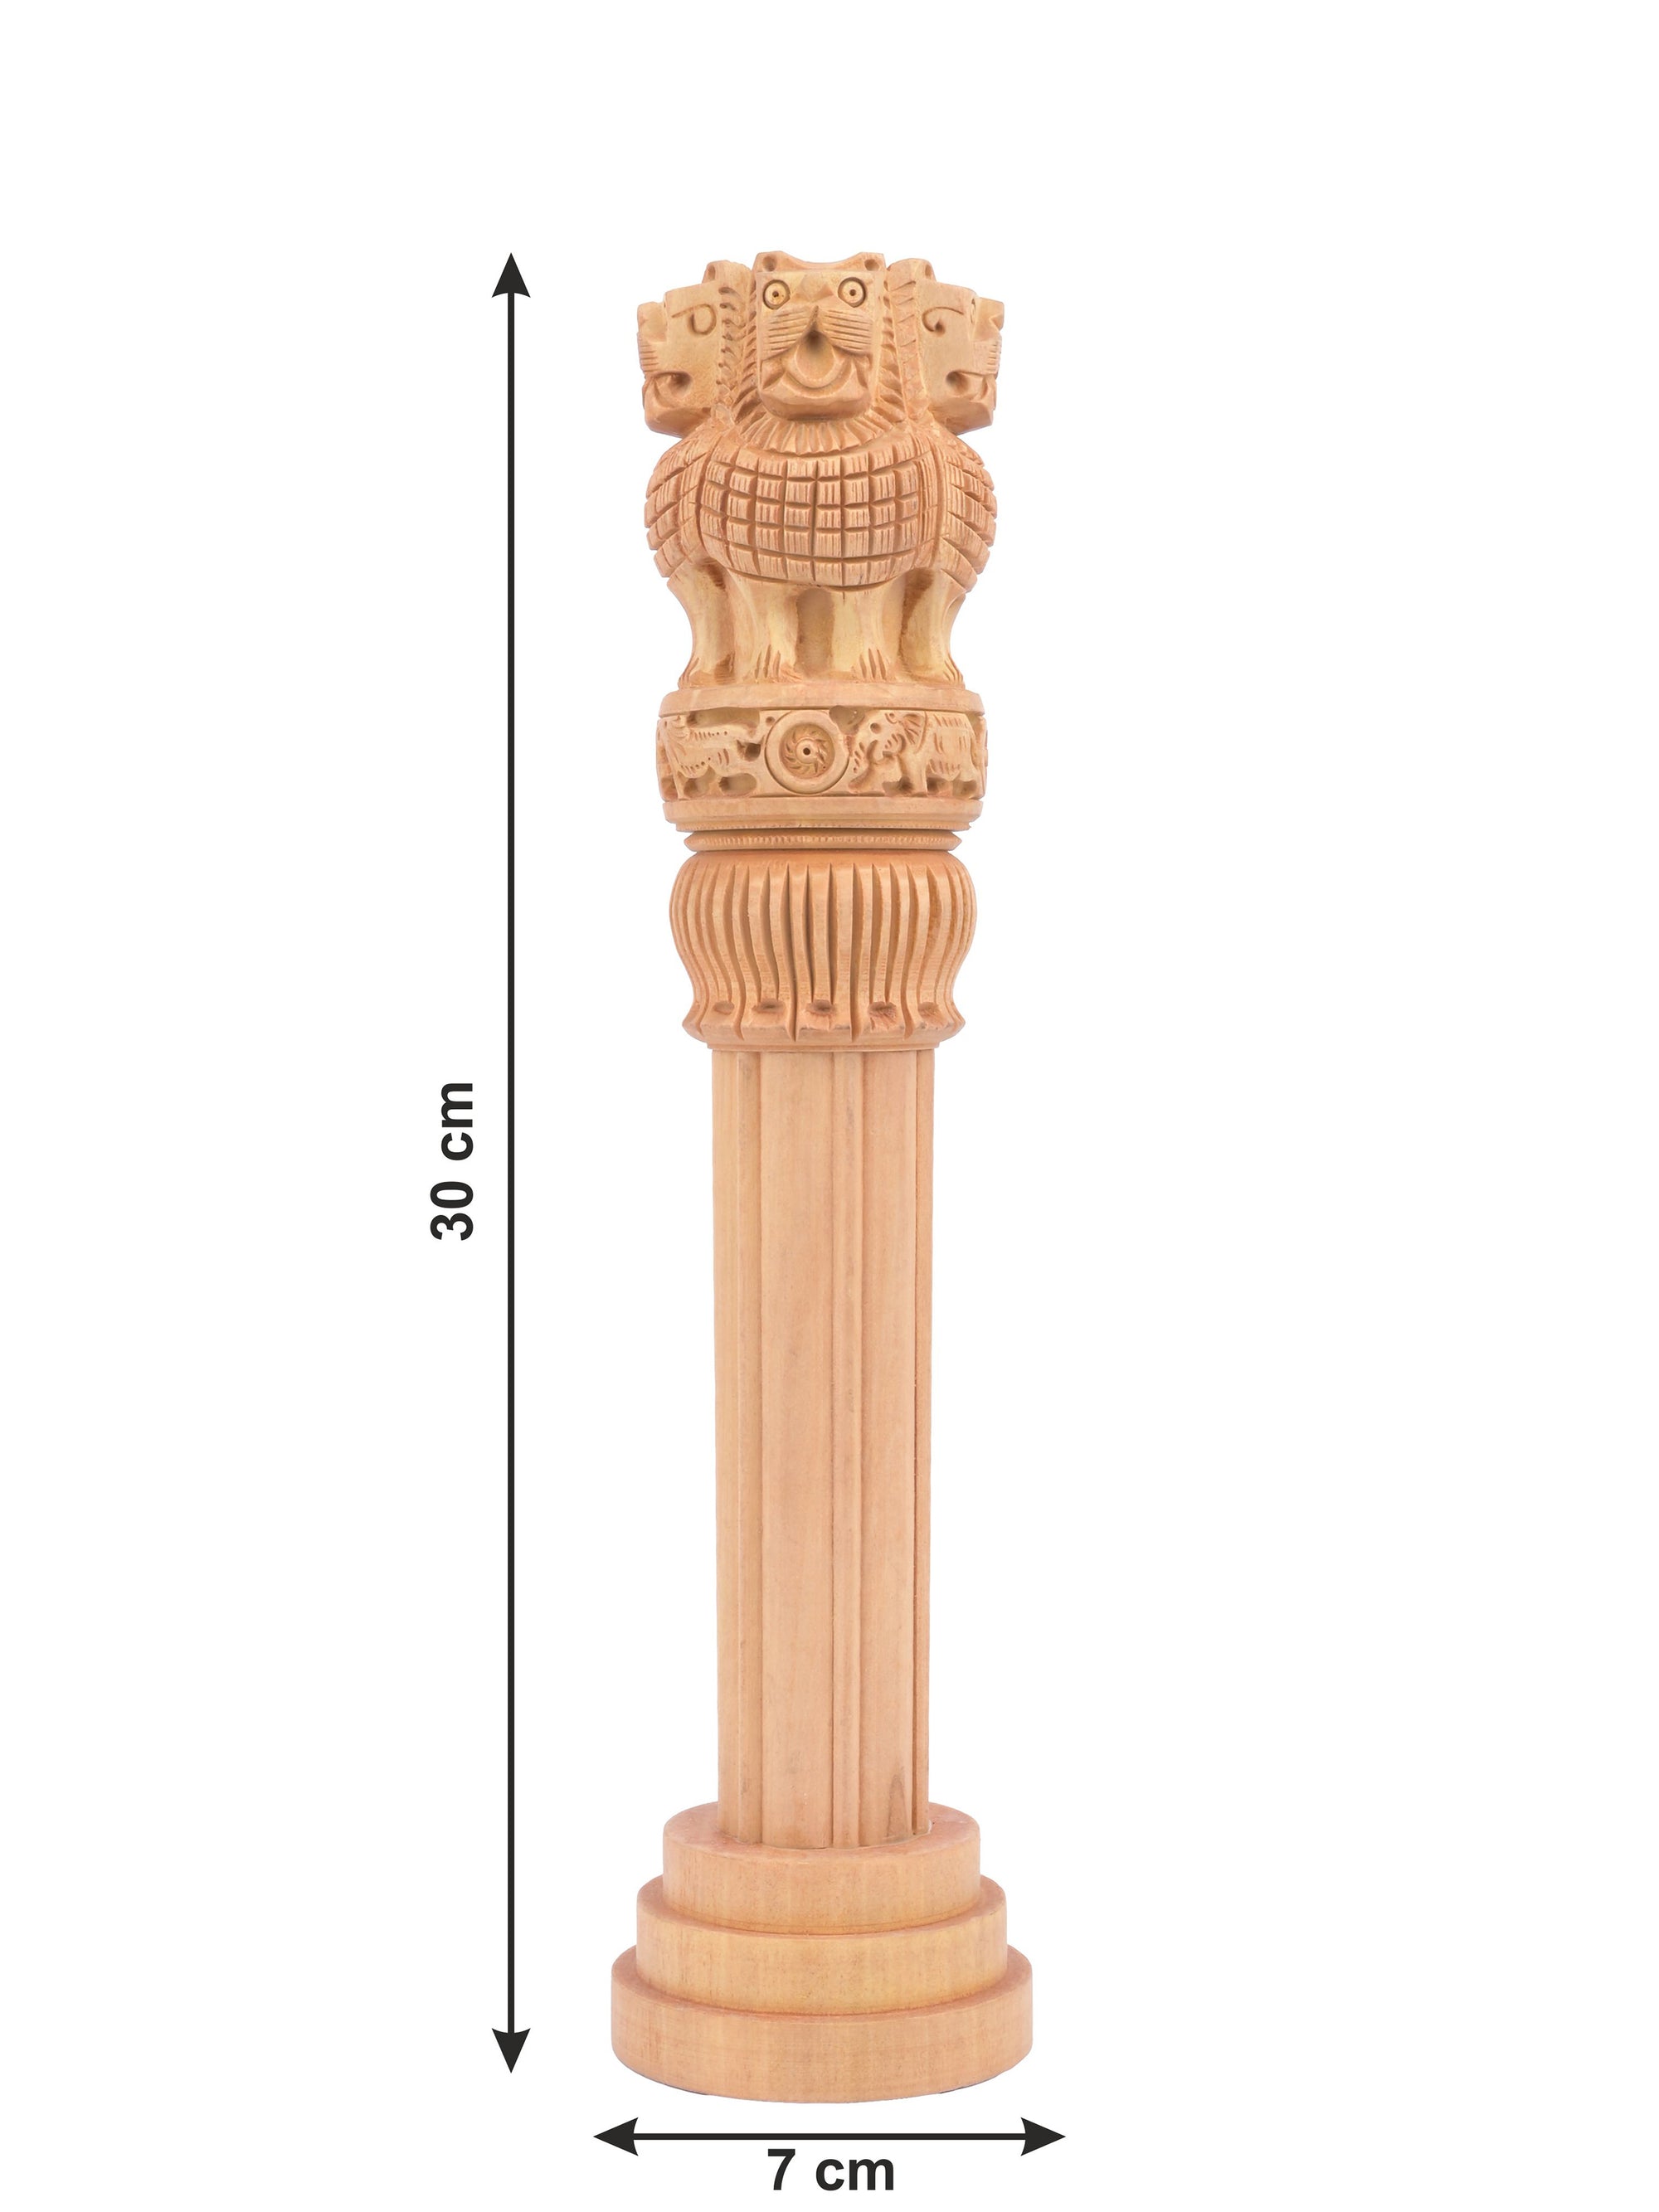 Kadam wood carved Ashok Stambh / Pillar - 12 inches in height - The Heritage Artifacts